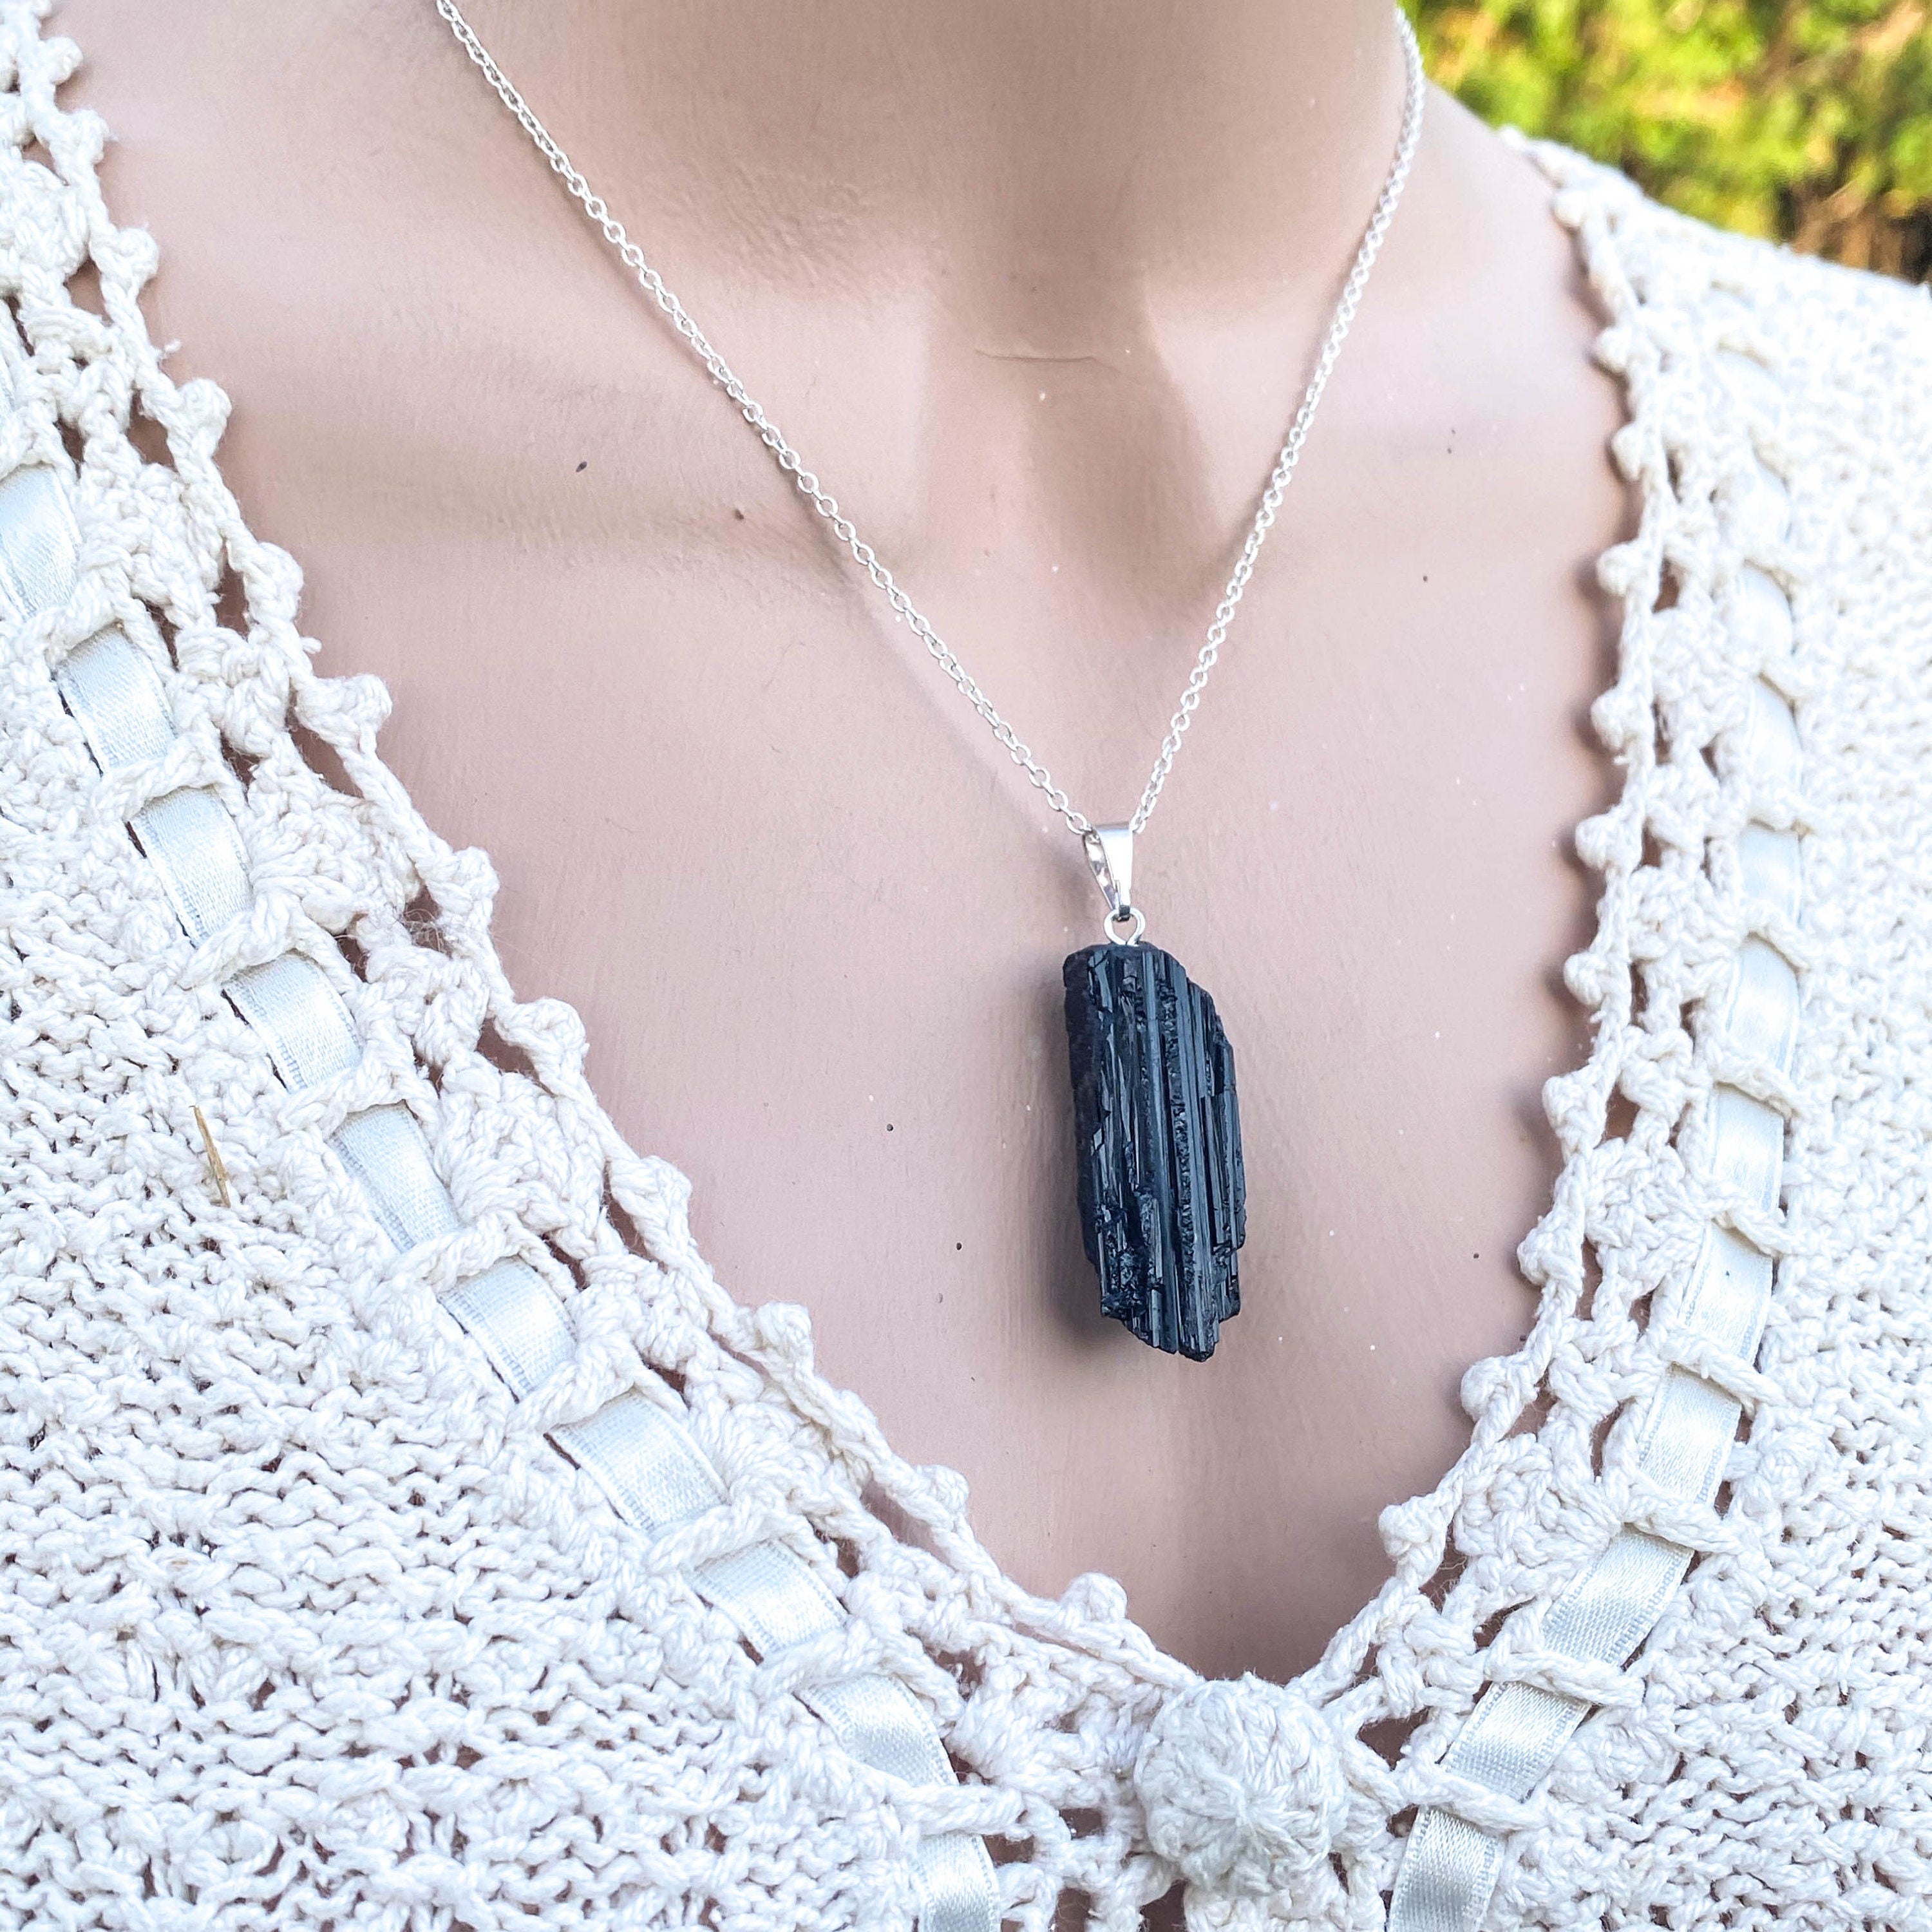 BLACK TOURMALINE necklace pendant